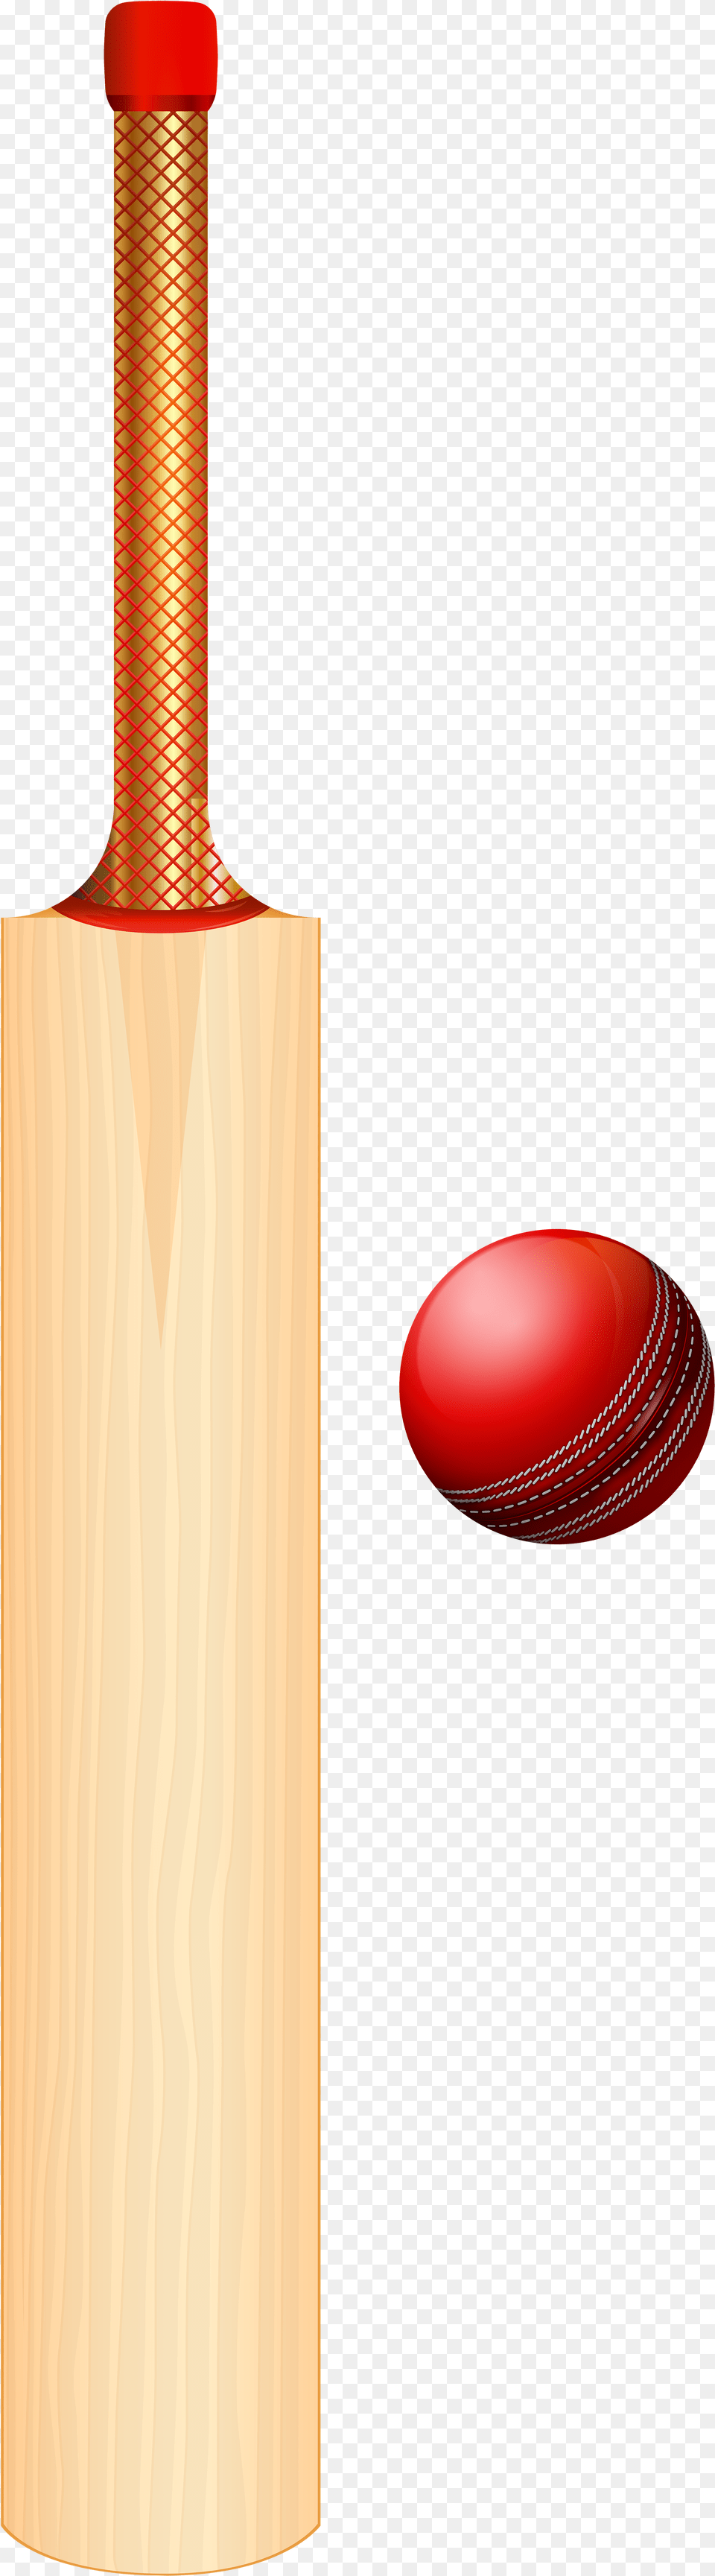 Cricket Clipart Kickball, Ball, Cricket Ball, Sport, Cricket Bat Png Image